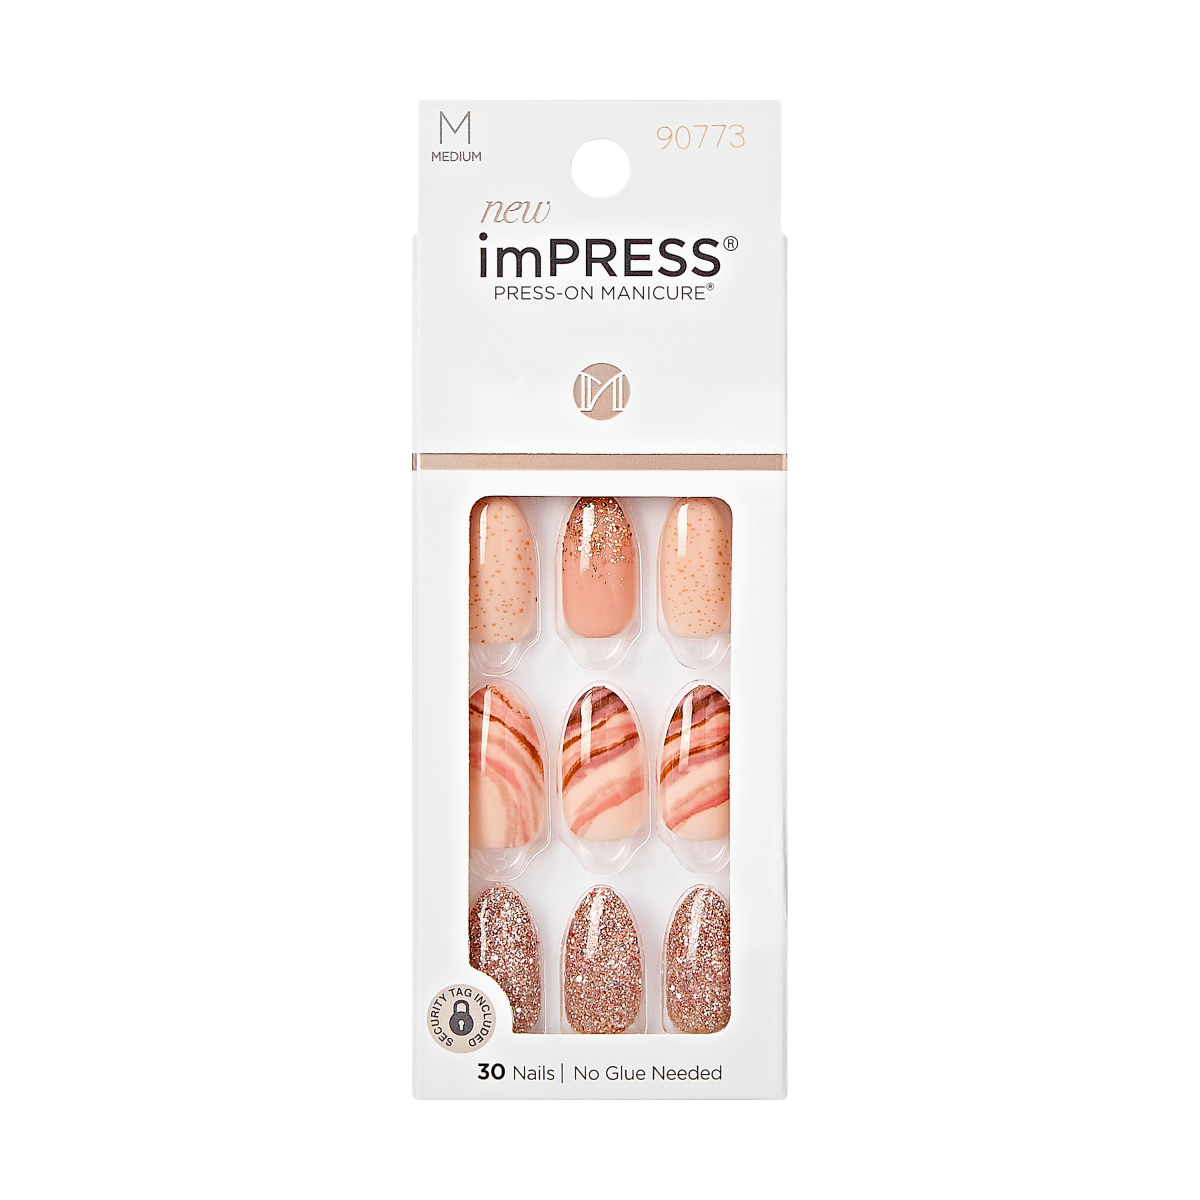 KISS imPRESS No Glue Mani Press On Nails, Design, Rose Dust, Multicolor, Med Almond, 30ct